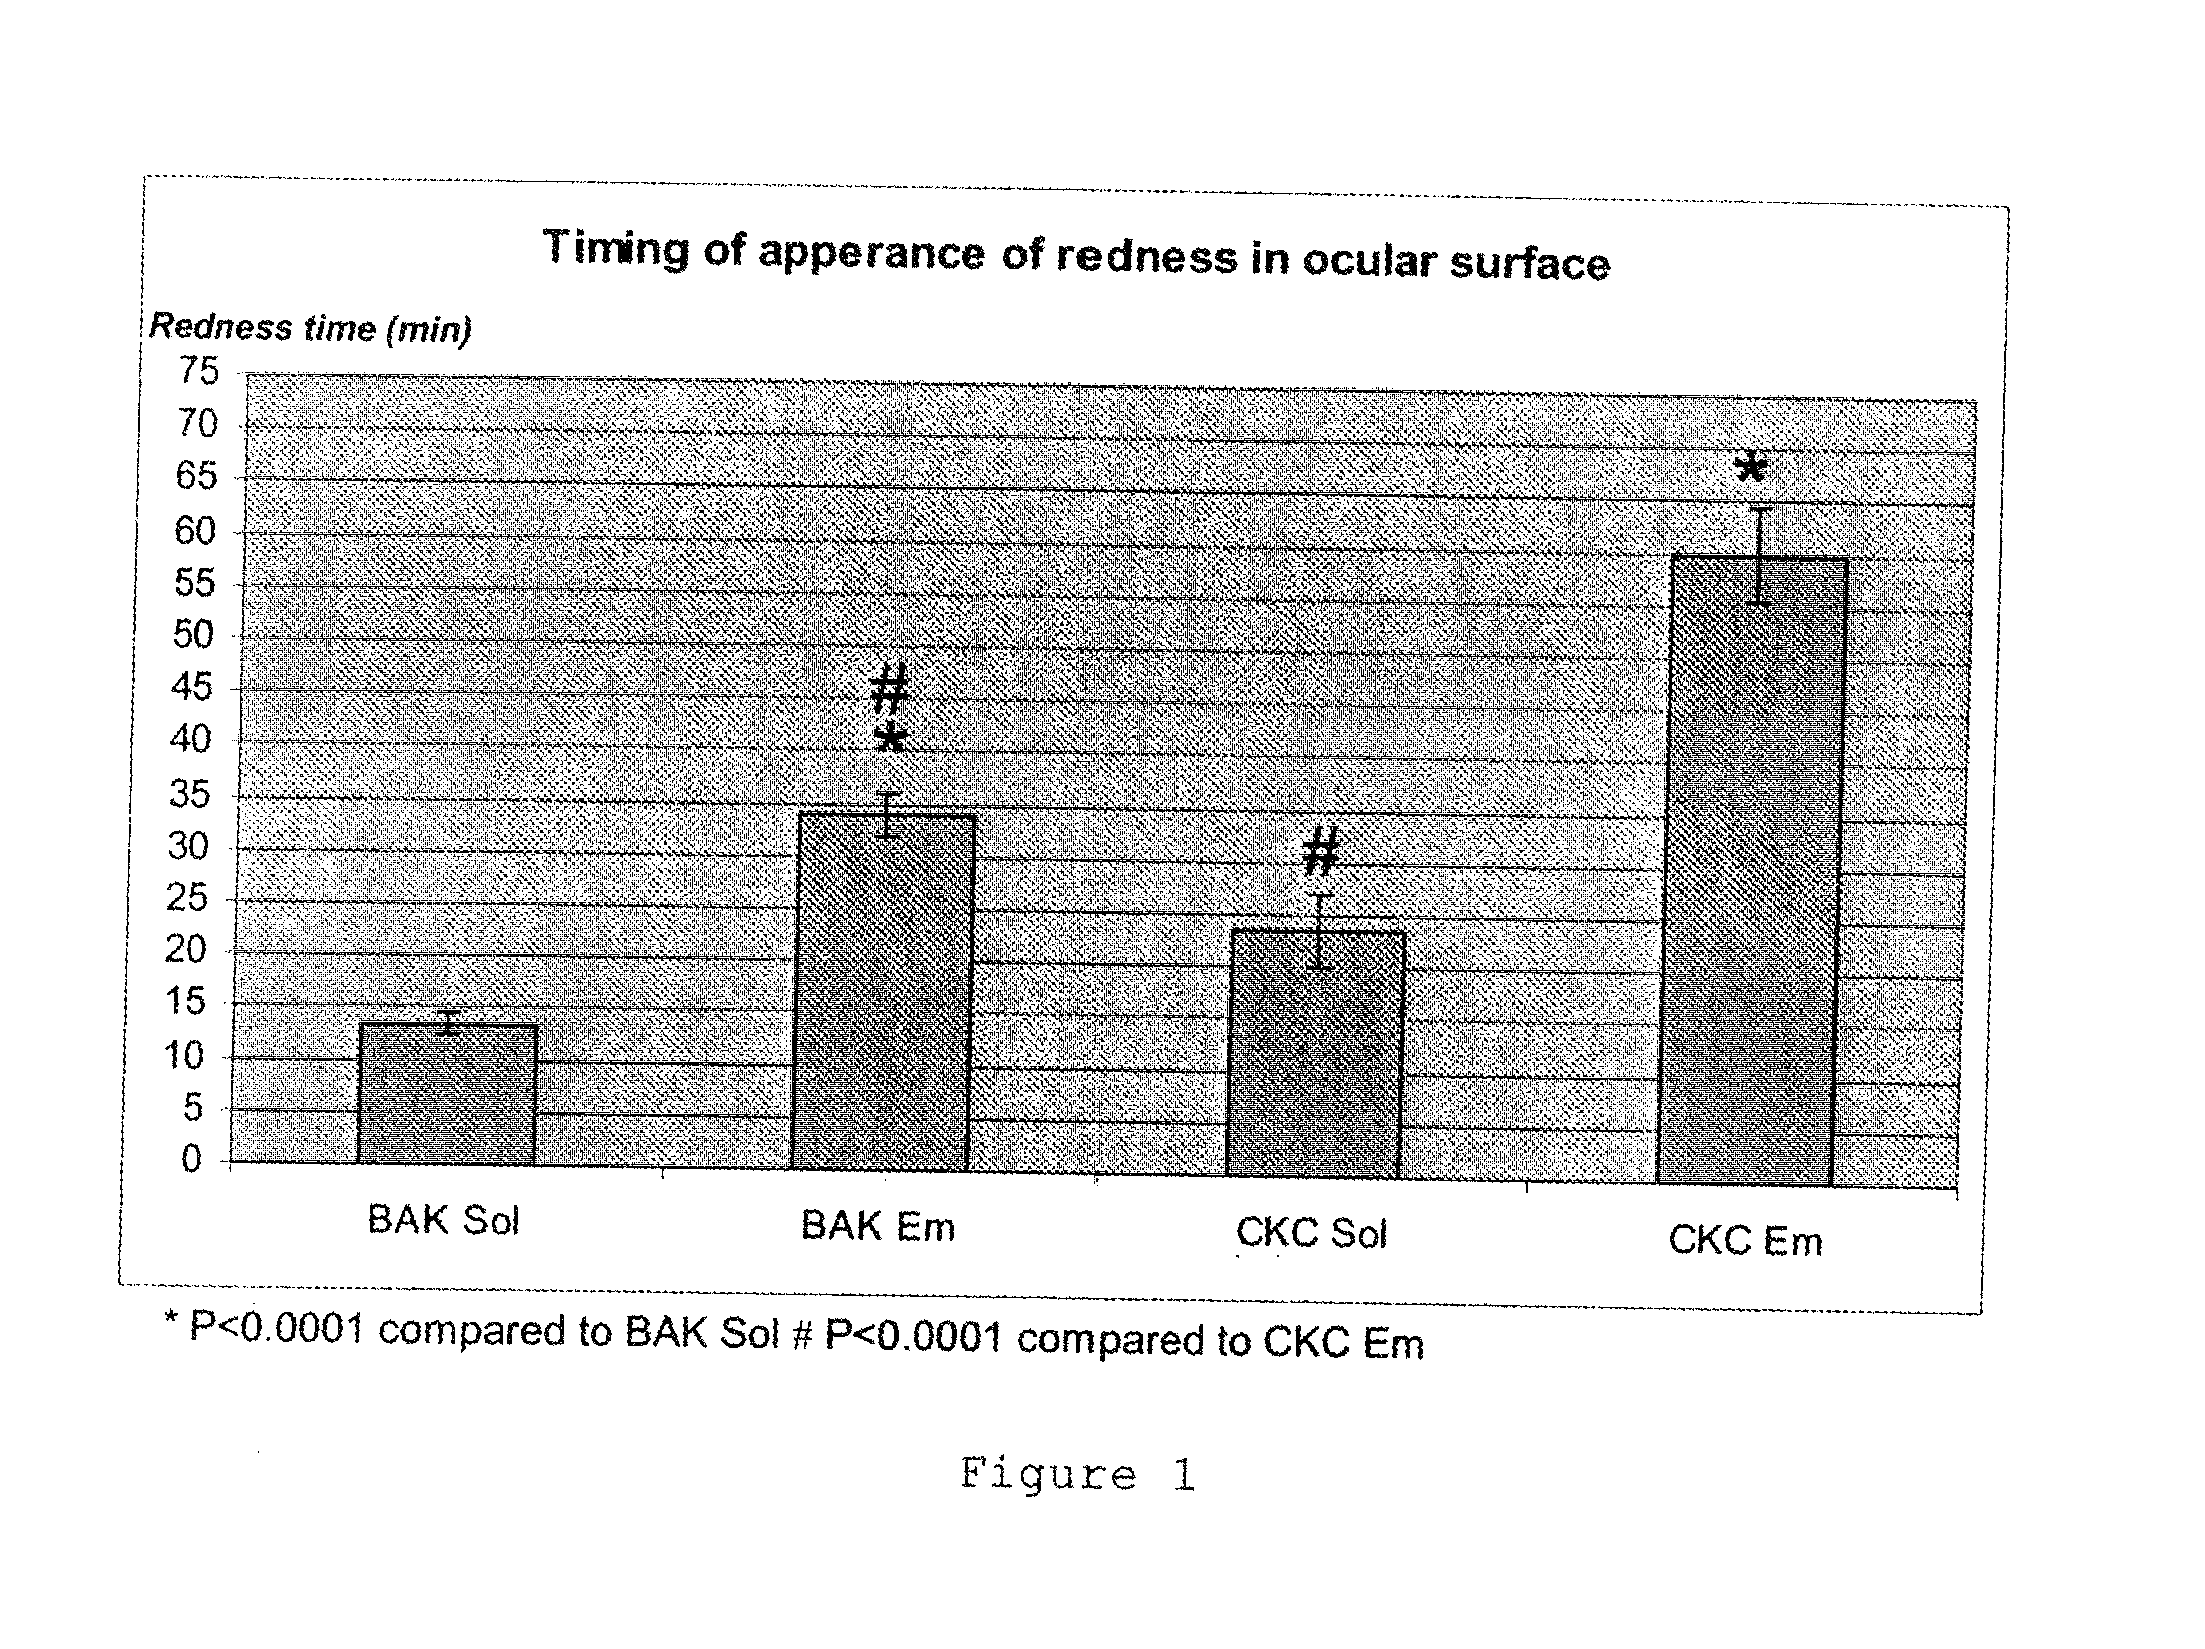 Compositions containing quaternary ammonium compounds